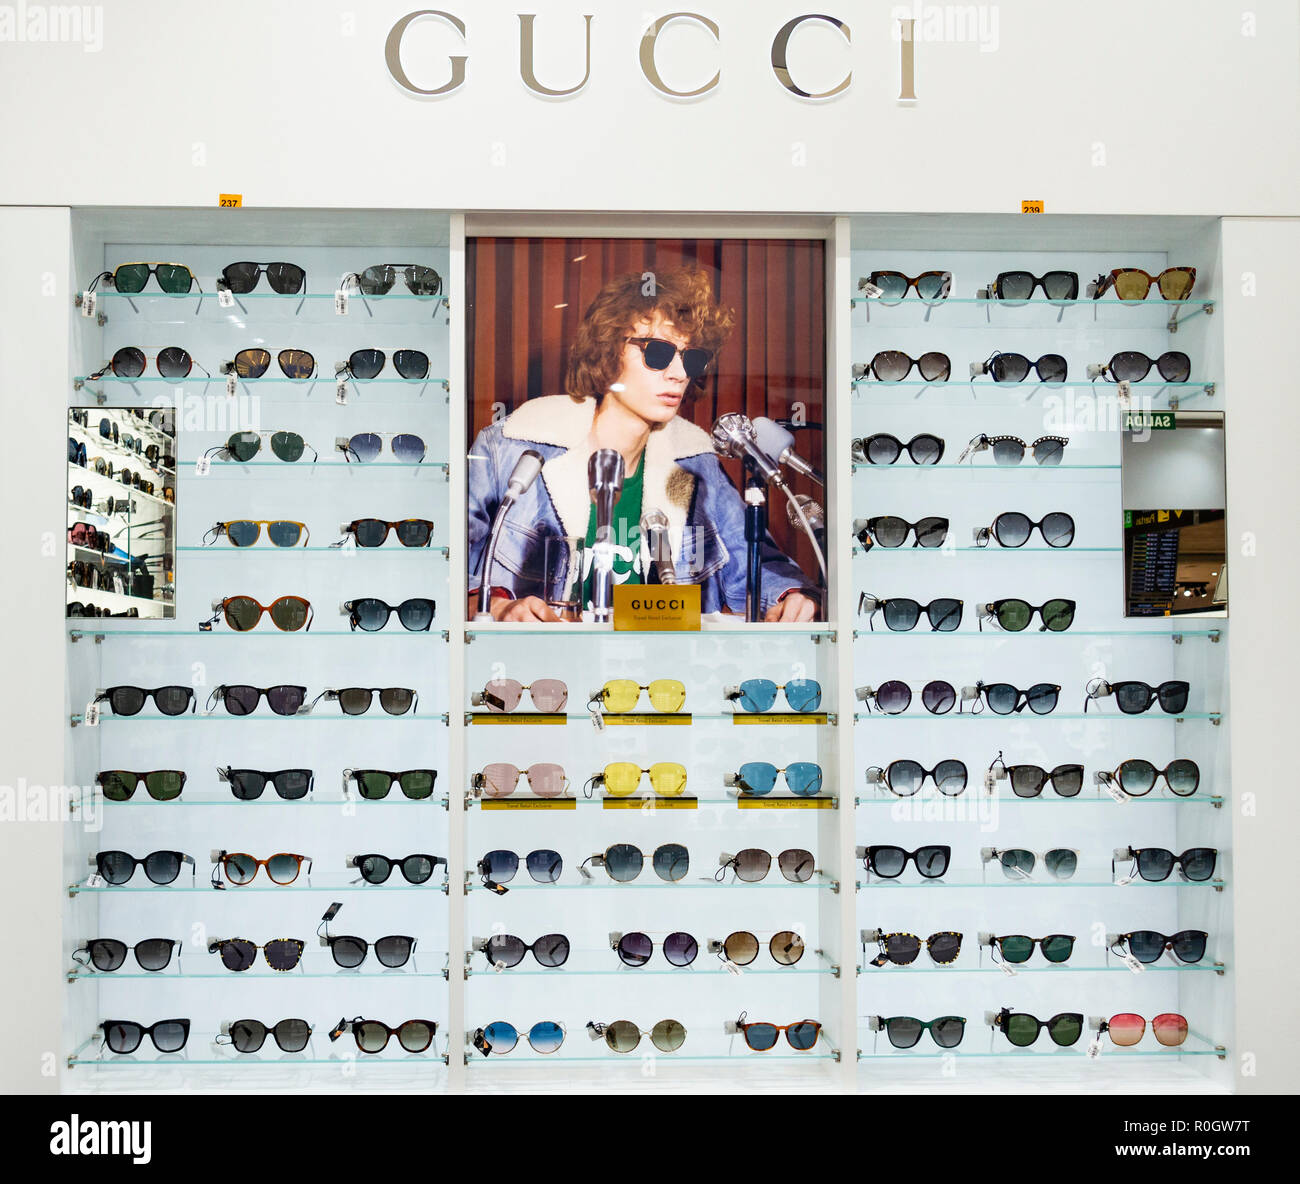 gucci sunglasses shop